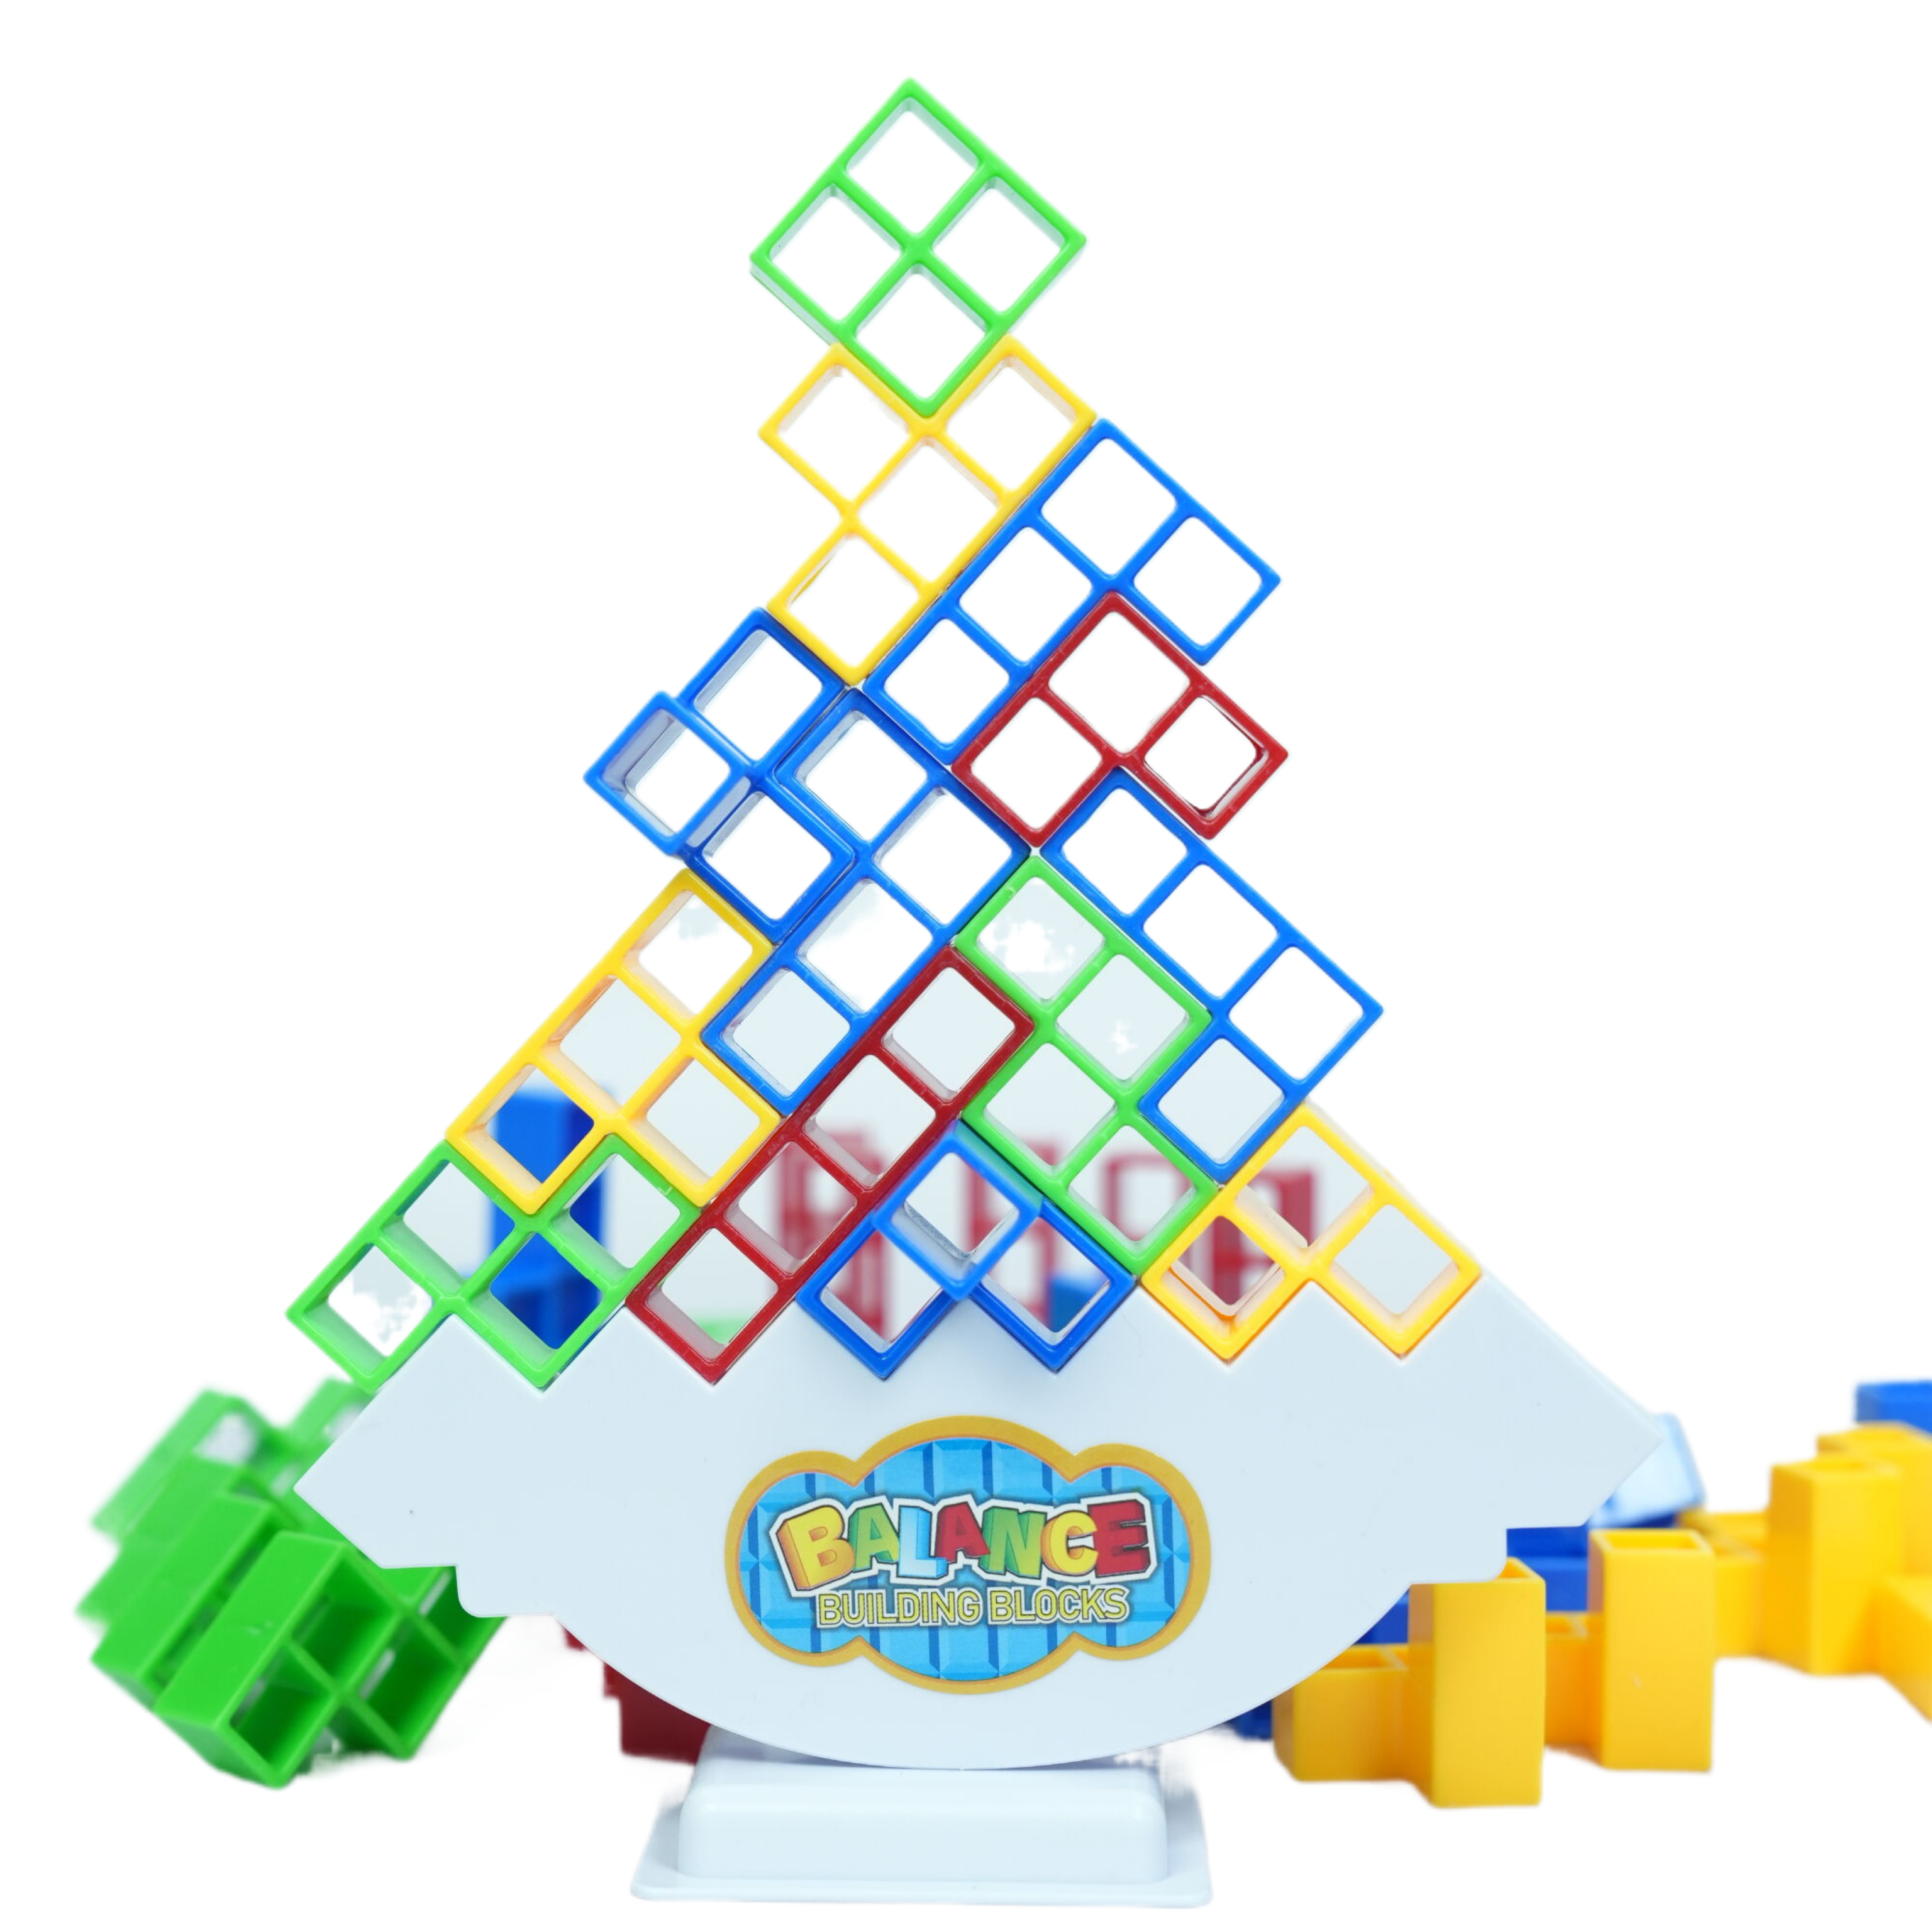 02-Balance building blocks swing Tetris